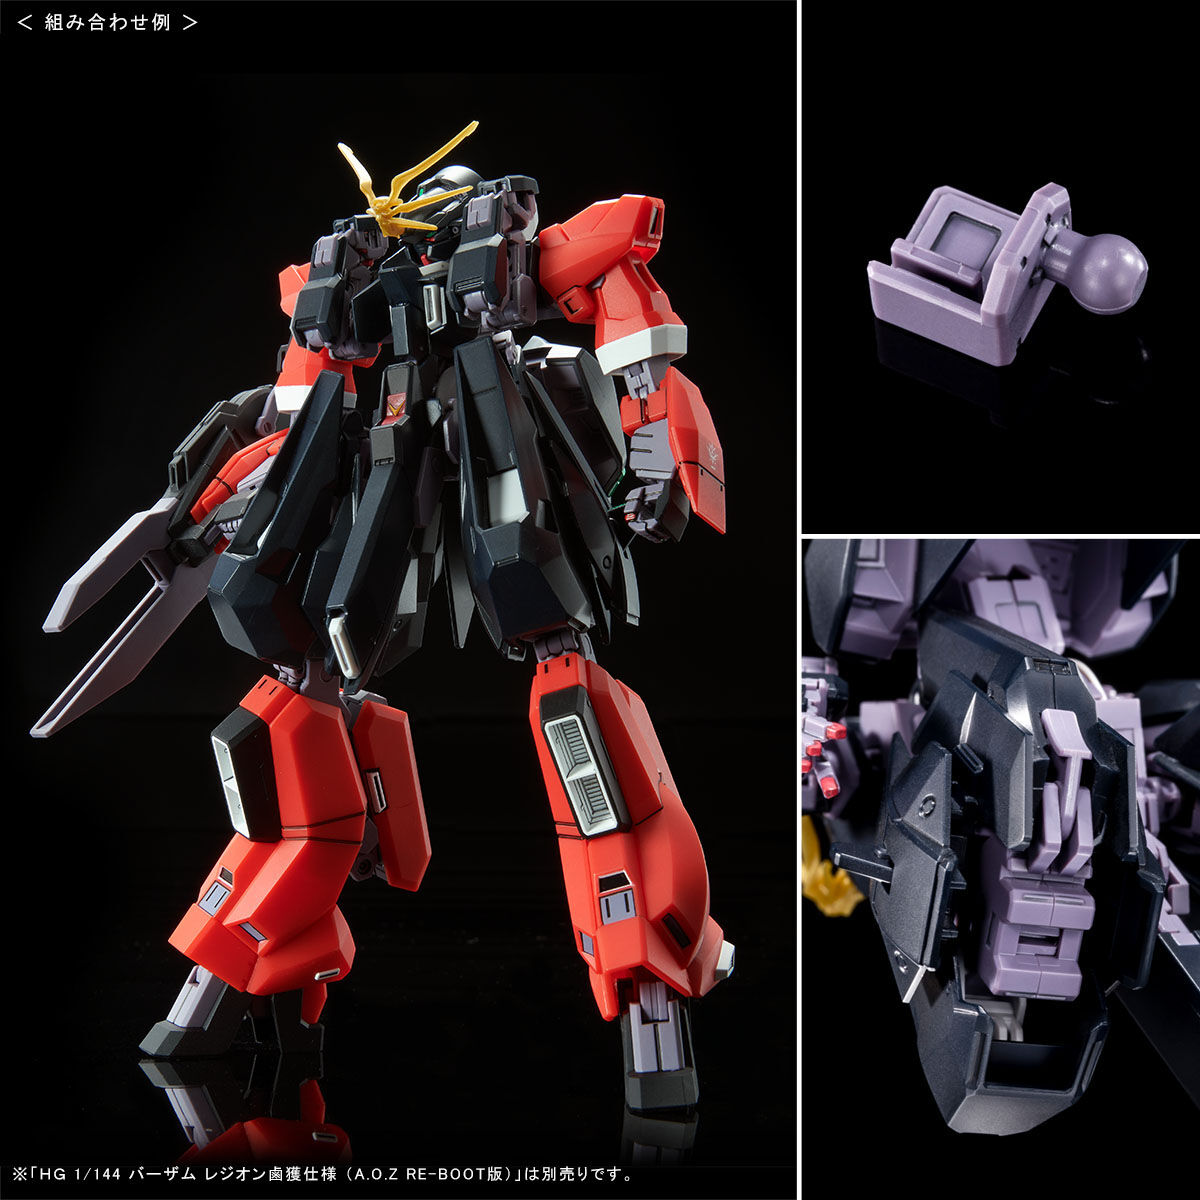 HGUC 1/144 ARZ-124 Gundam TR-6[Woundwort] Psycho Blade Custom(A.O.Z. Re-Boot)